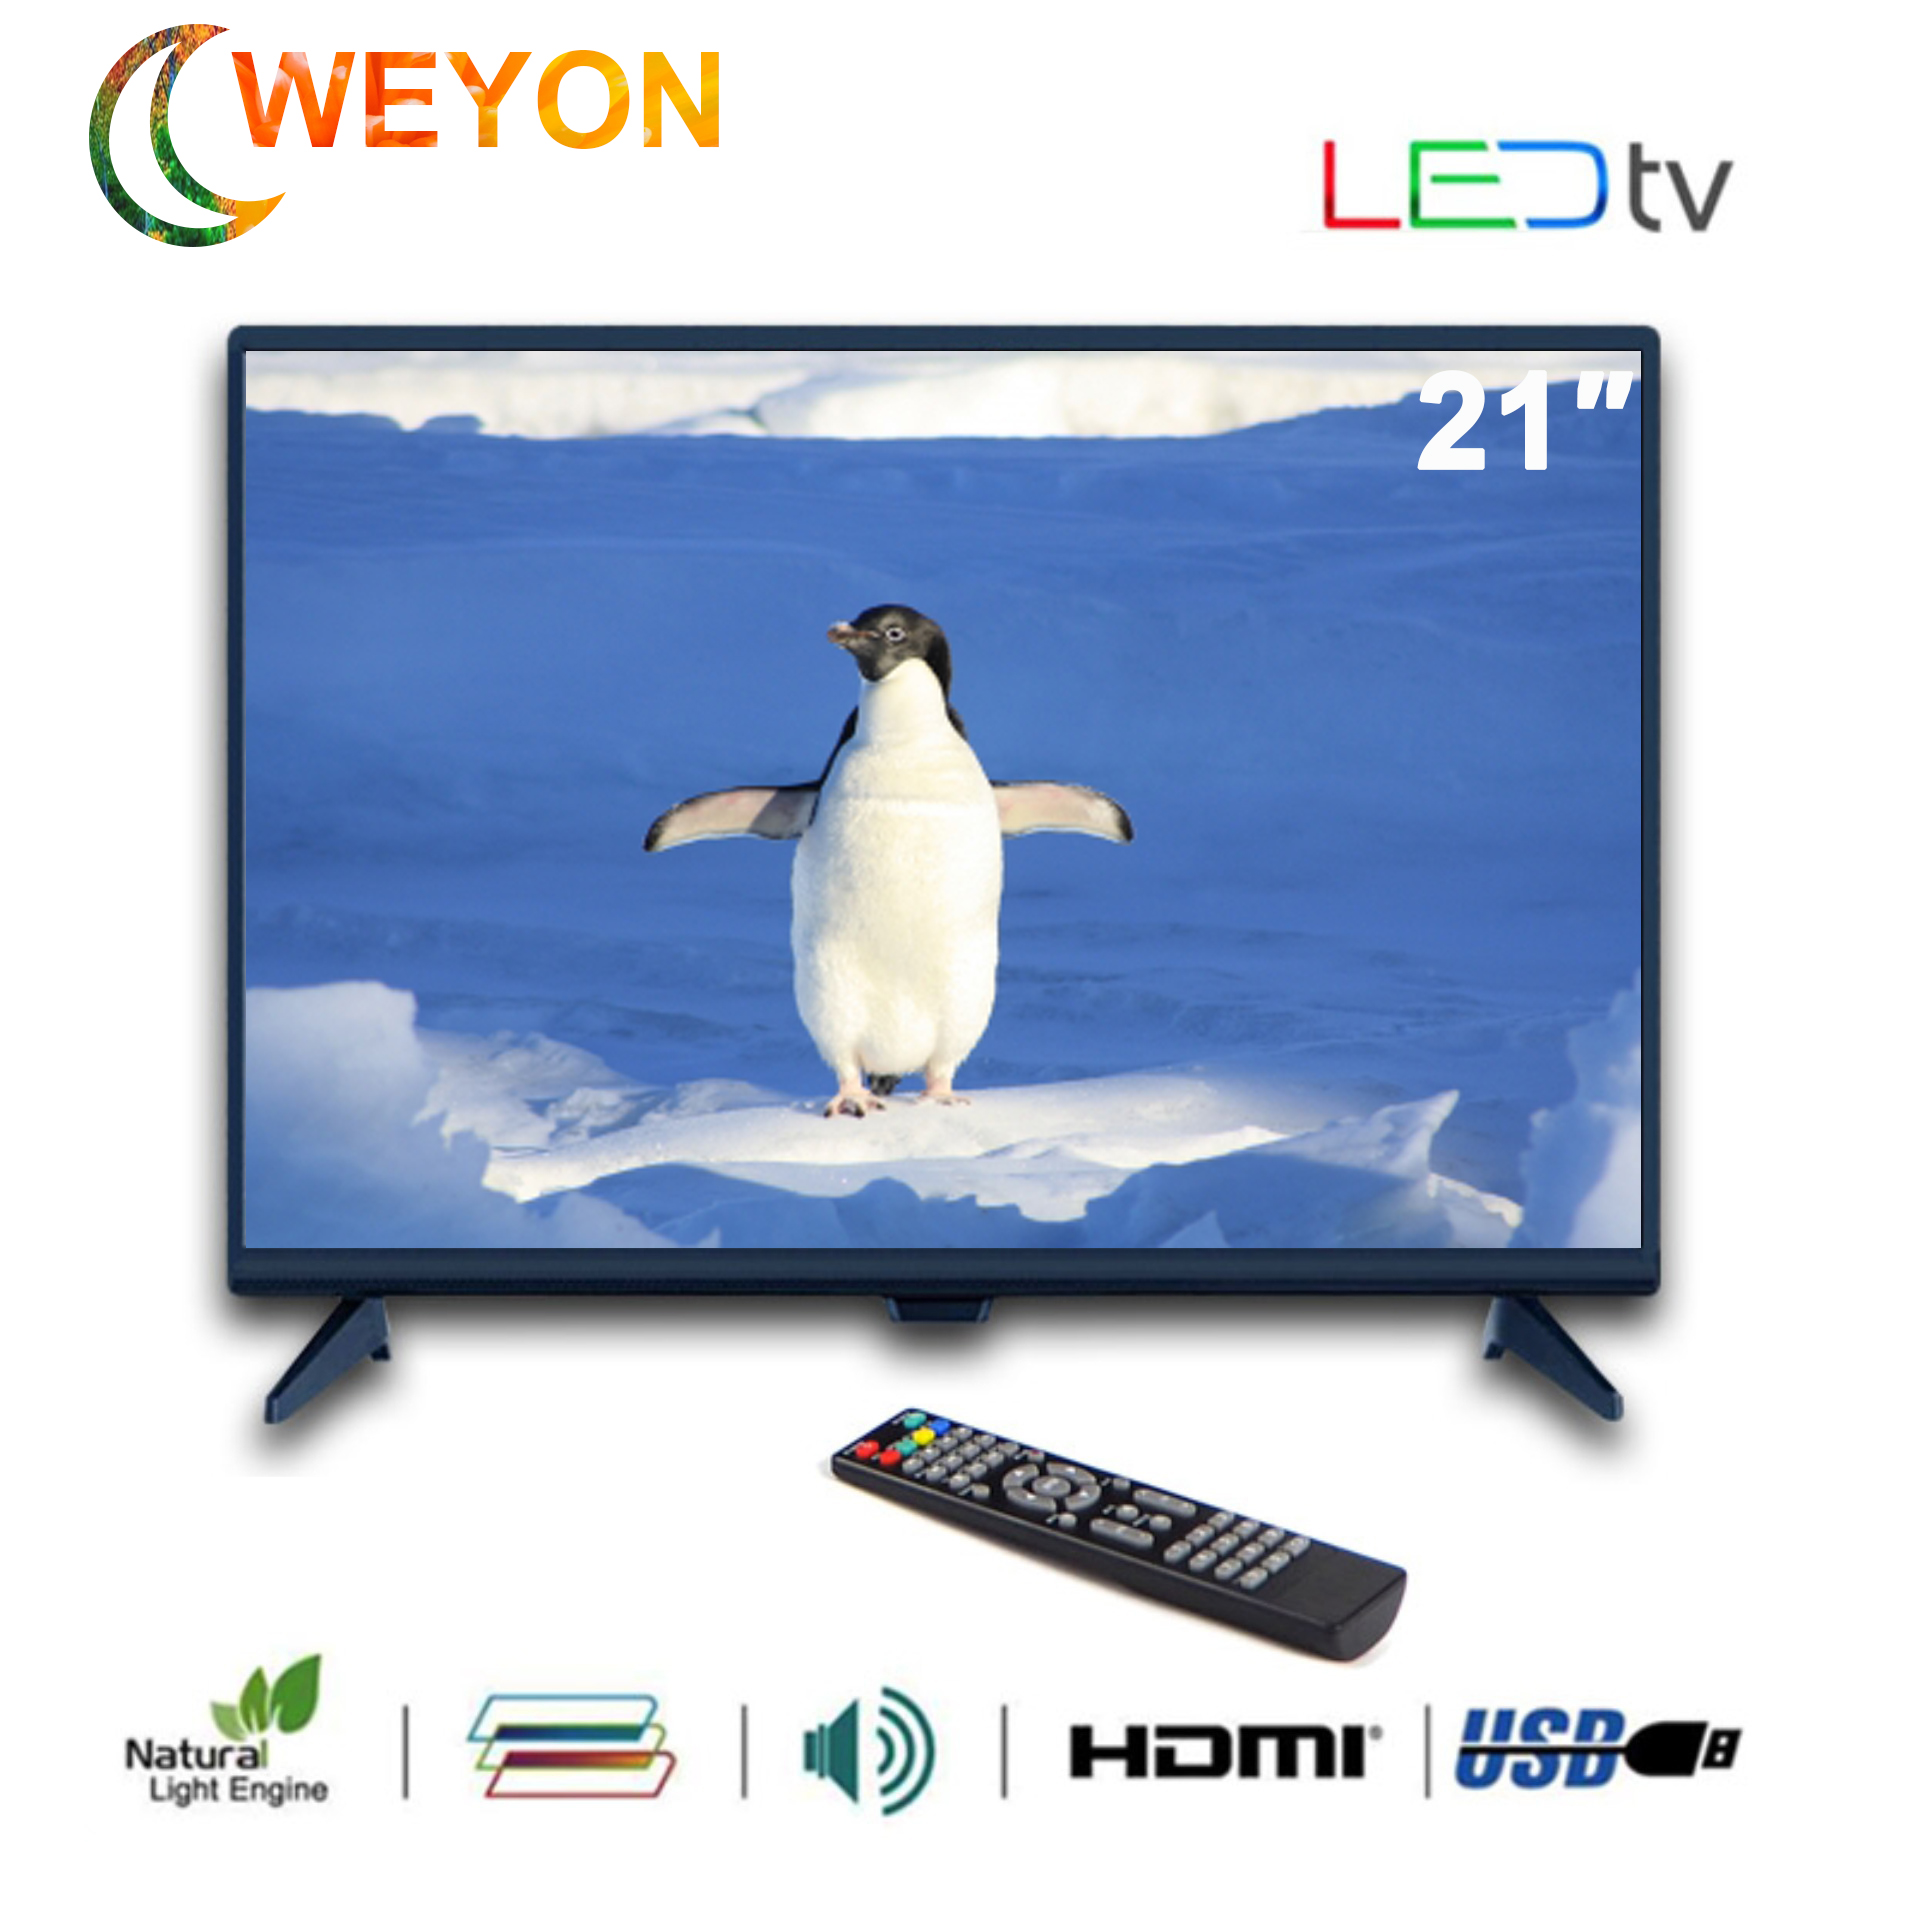 (Sales) NADU ทีวีราคาถูก 21 inches Led  HD Ready TV 1680 * 1050  （TCLG21A）